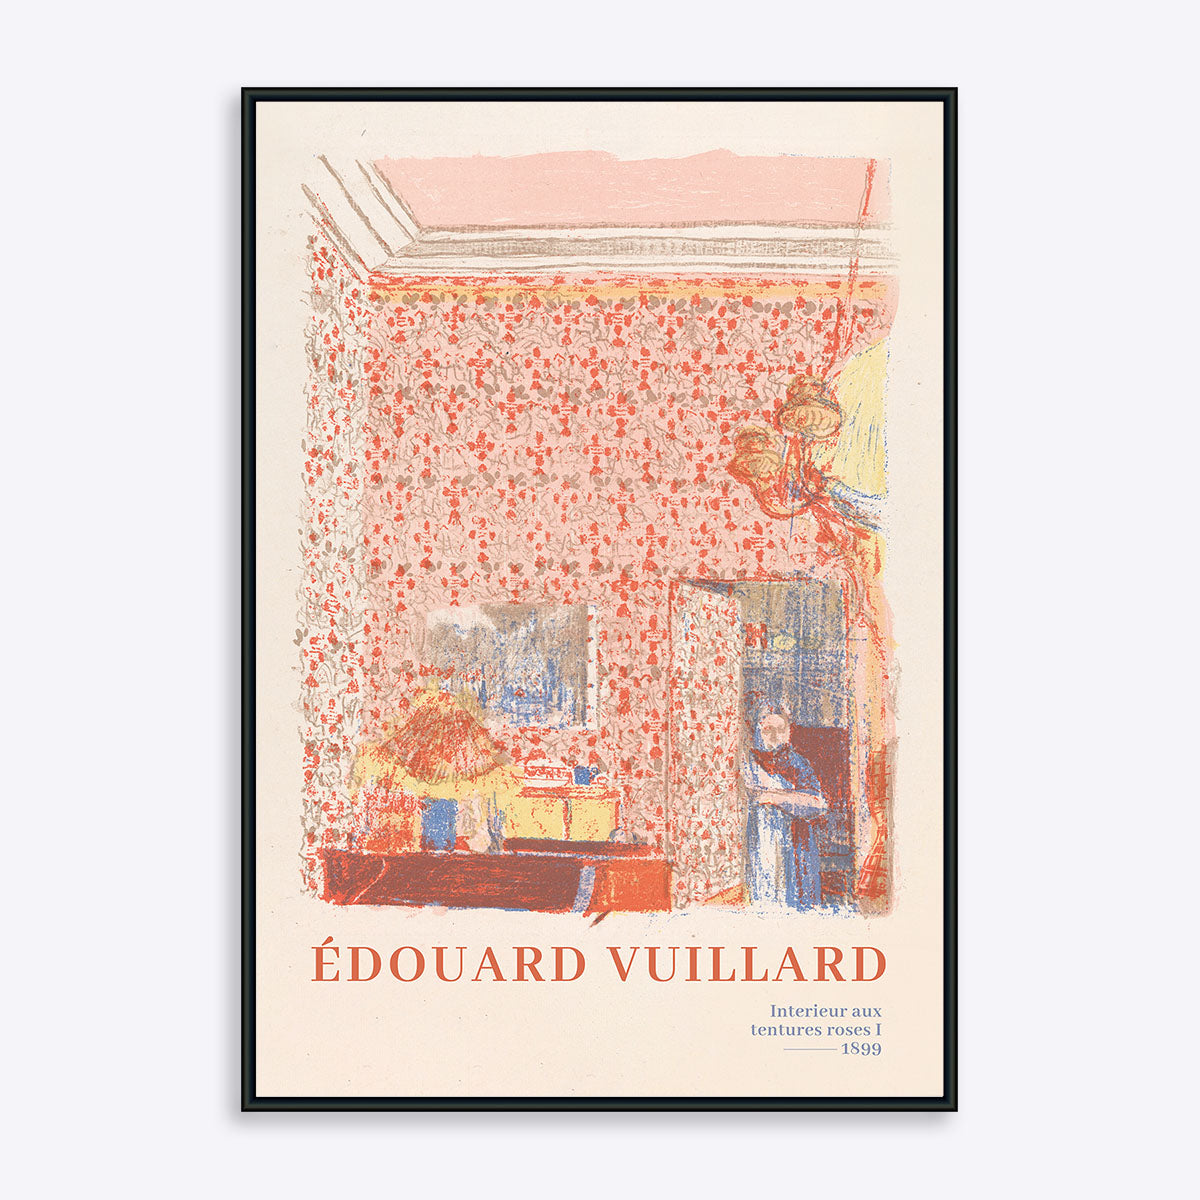 Kunstplakat af Edouard Vuillard i sort ramme